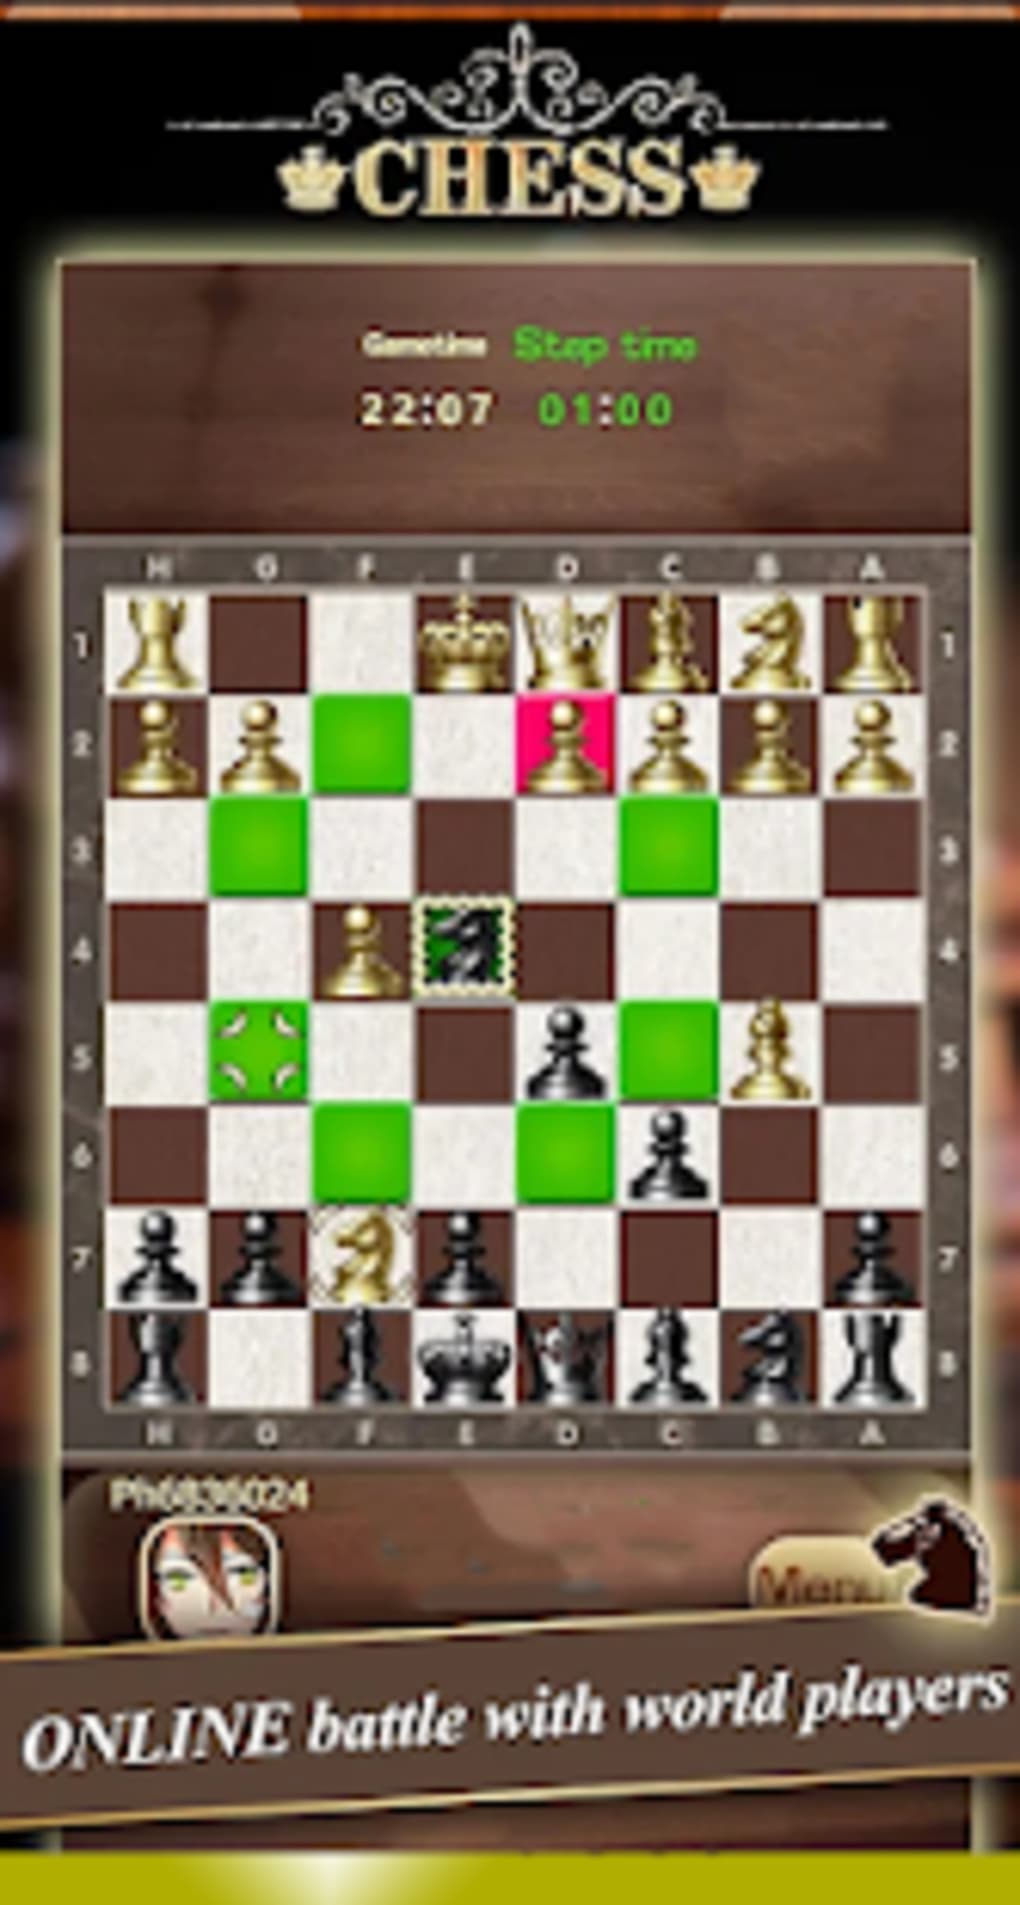 Chess Free 2019 - Master Chess- Play Chess Offline APK para